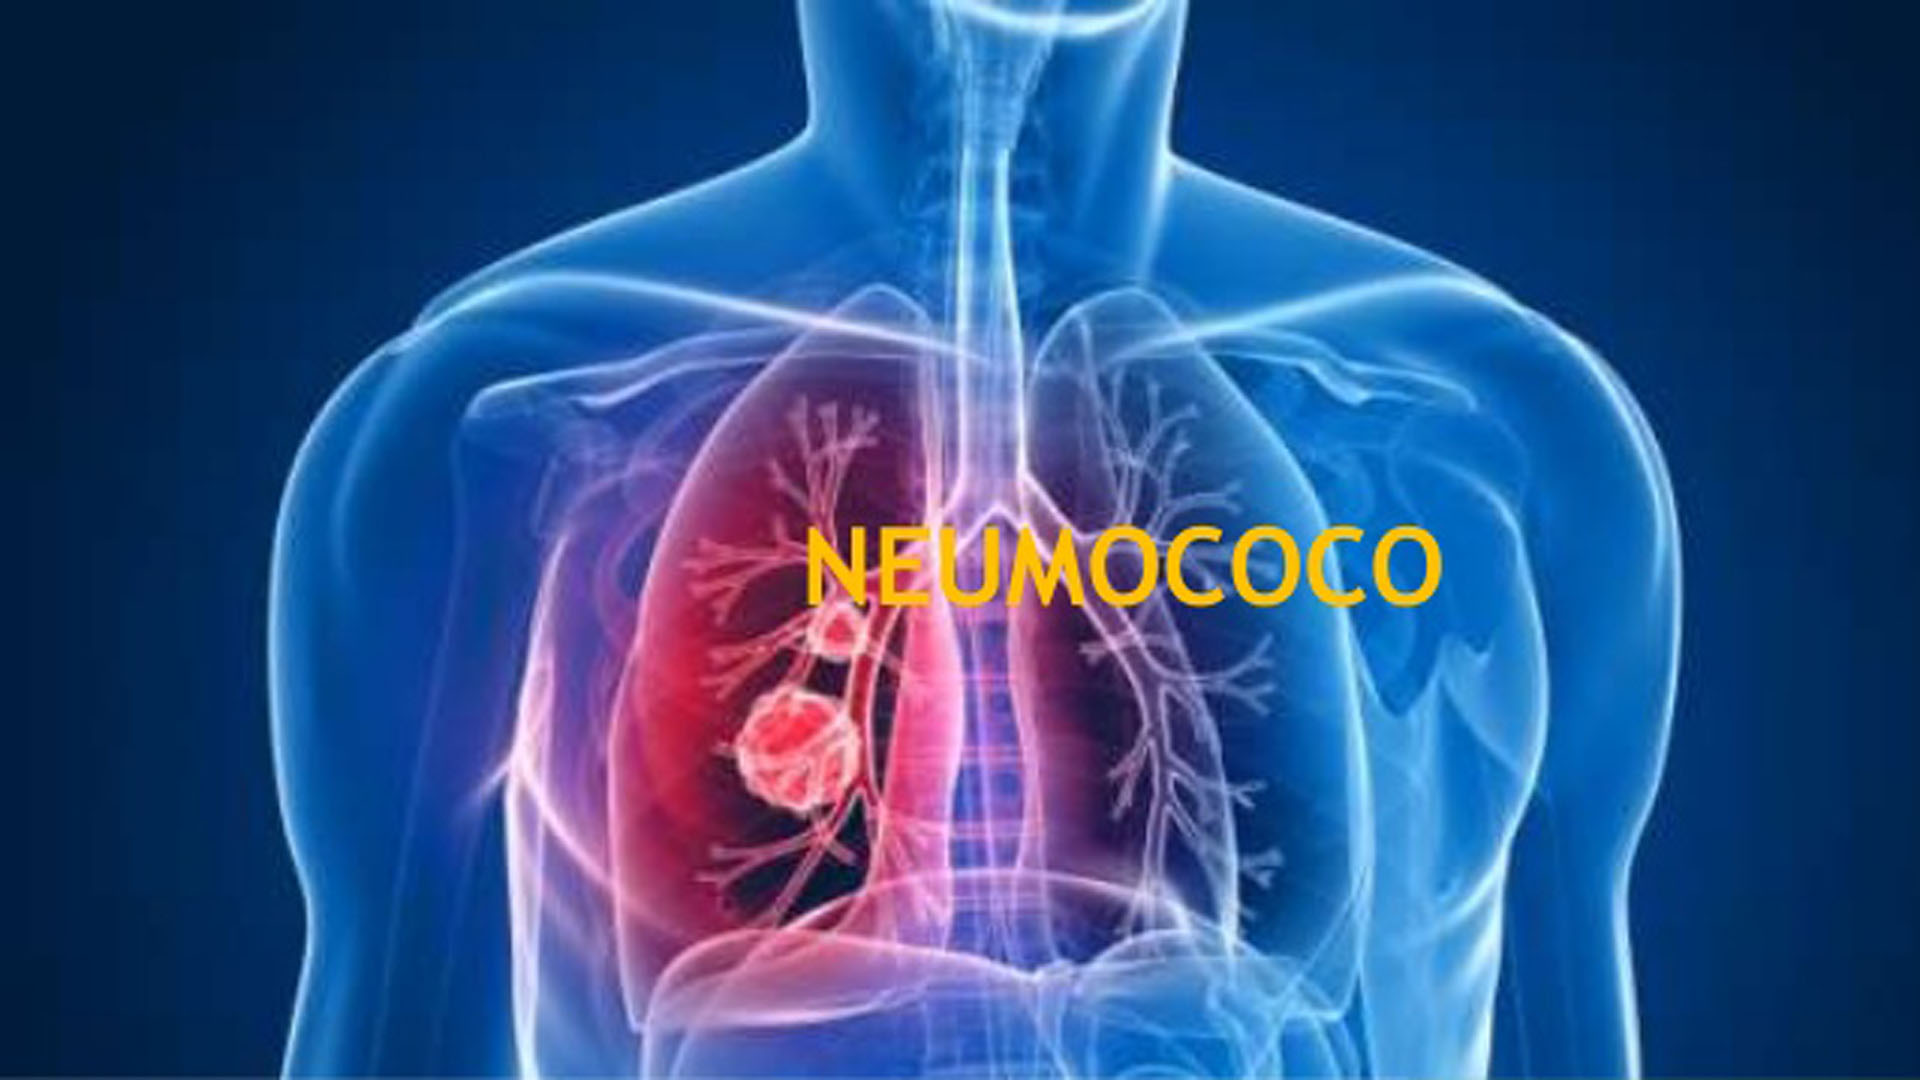 Neumococo: 3 enfermedades peligrosas causadas por esta bacteria